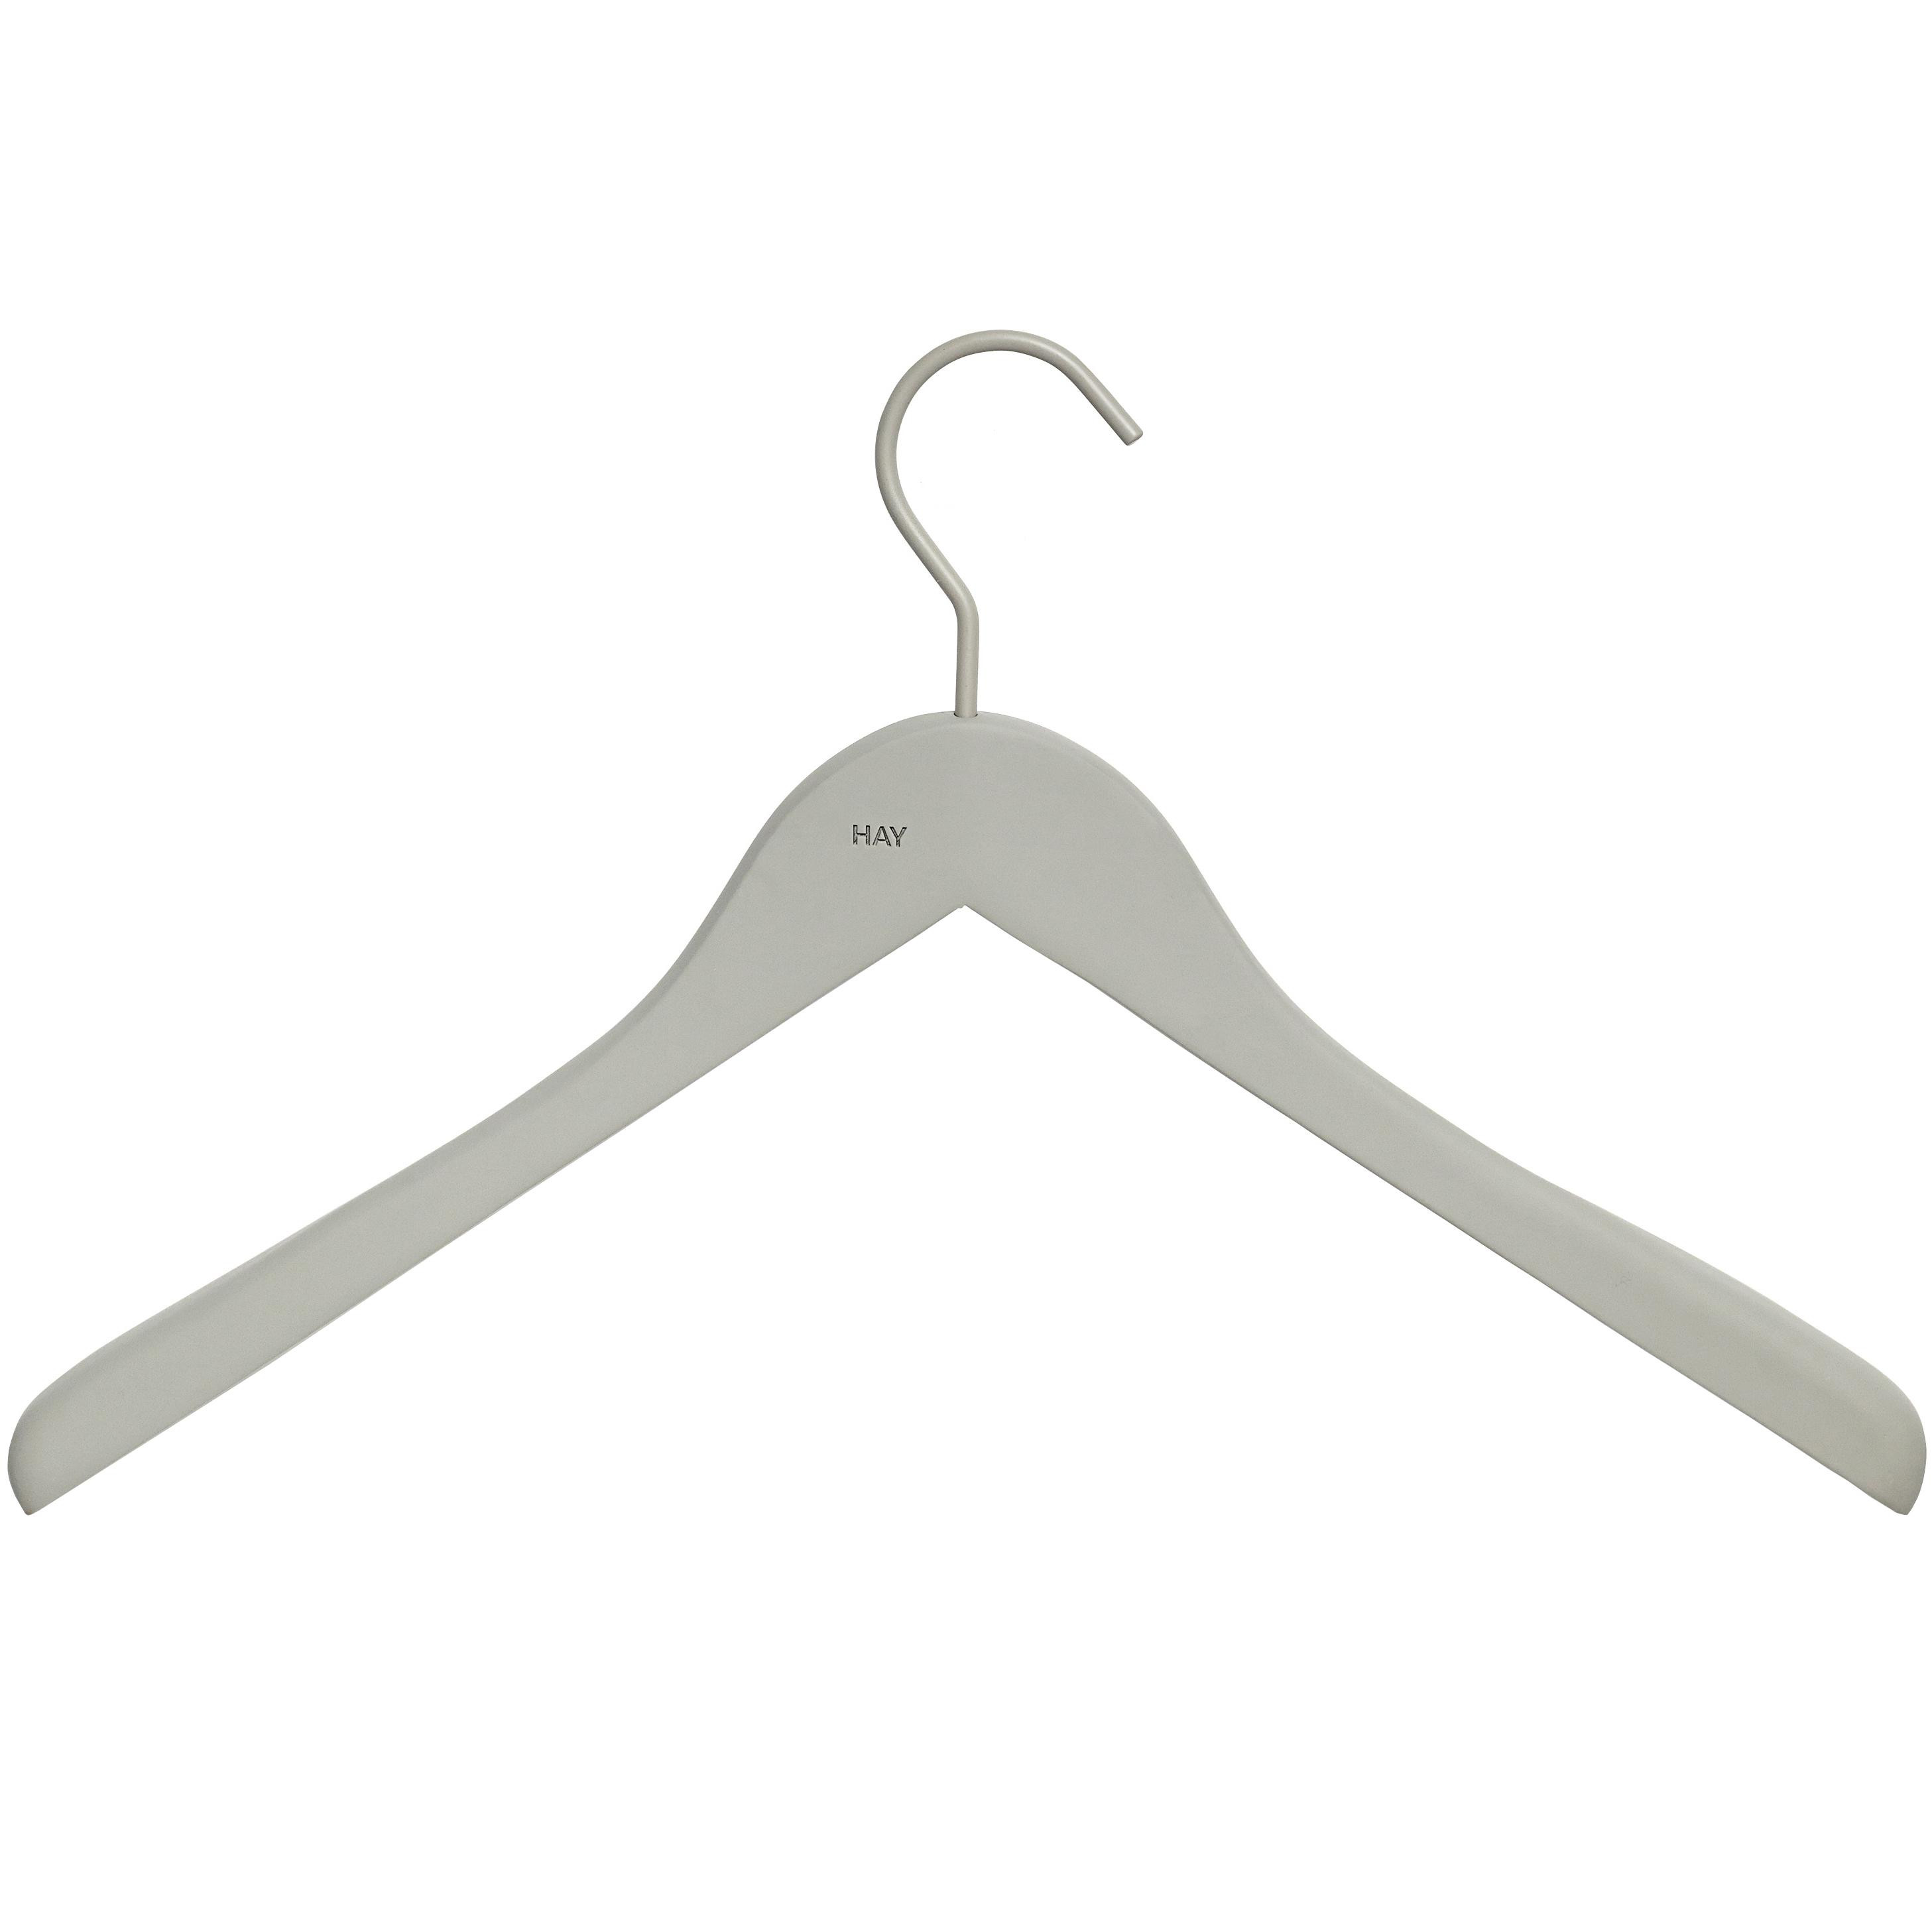 Hay Soft Coat kledinghanger set van 4 wide grey | Flinders